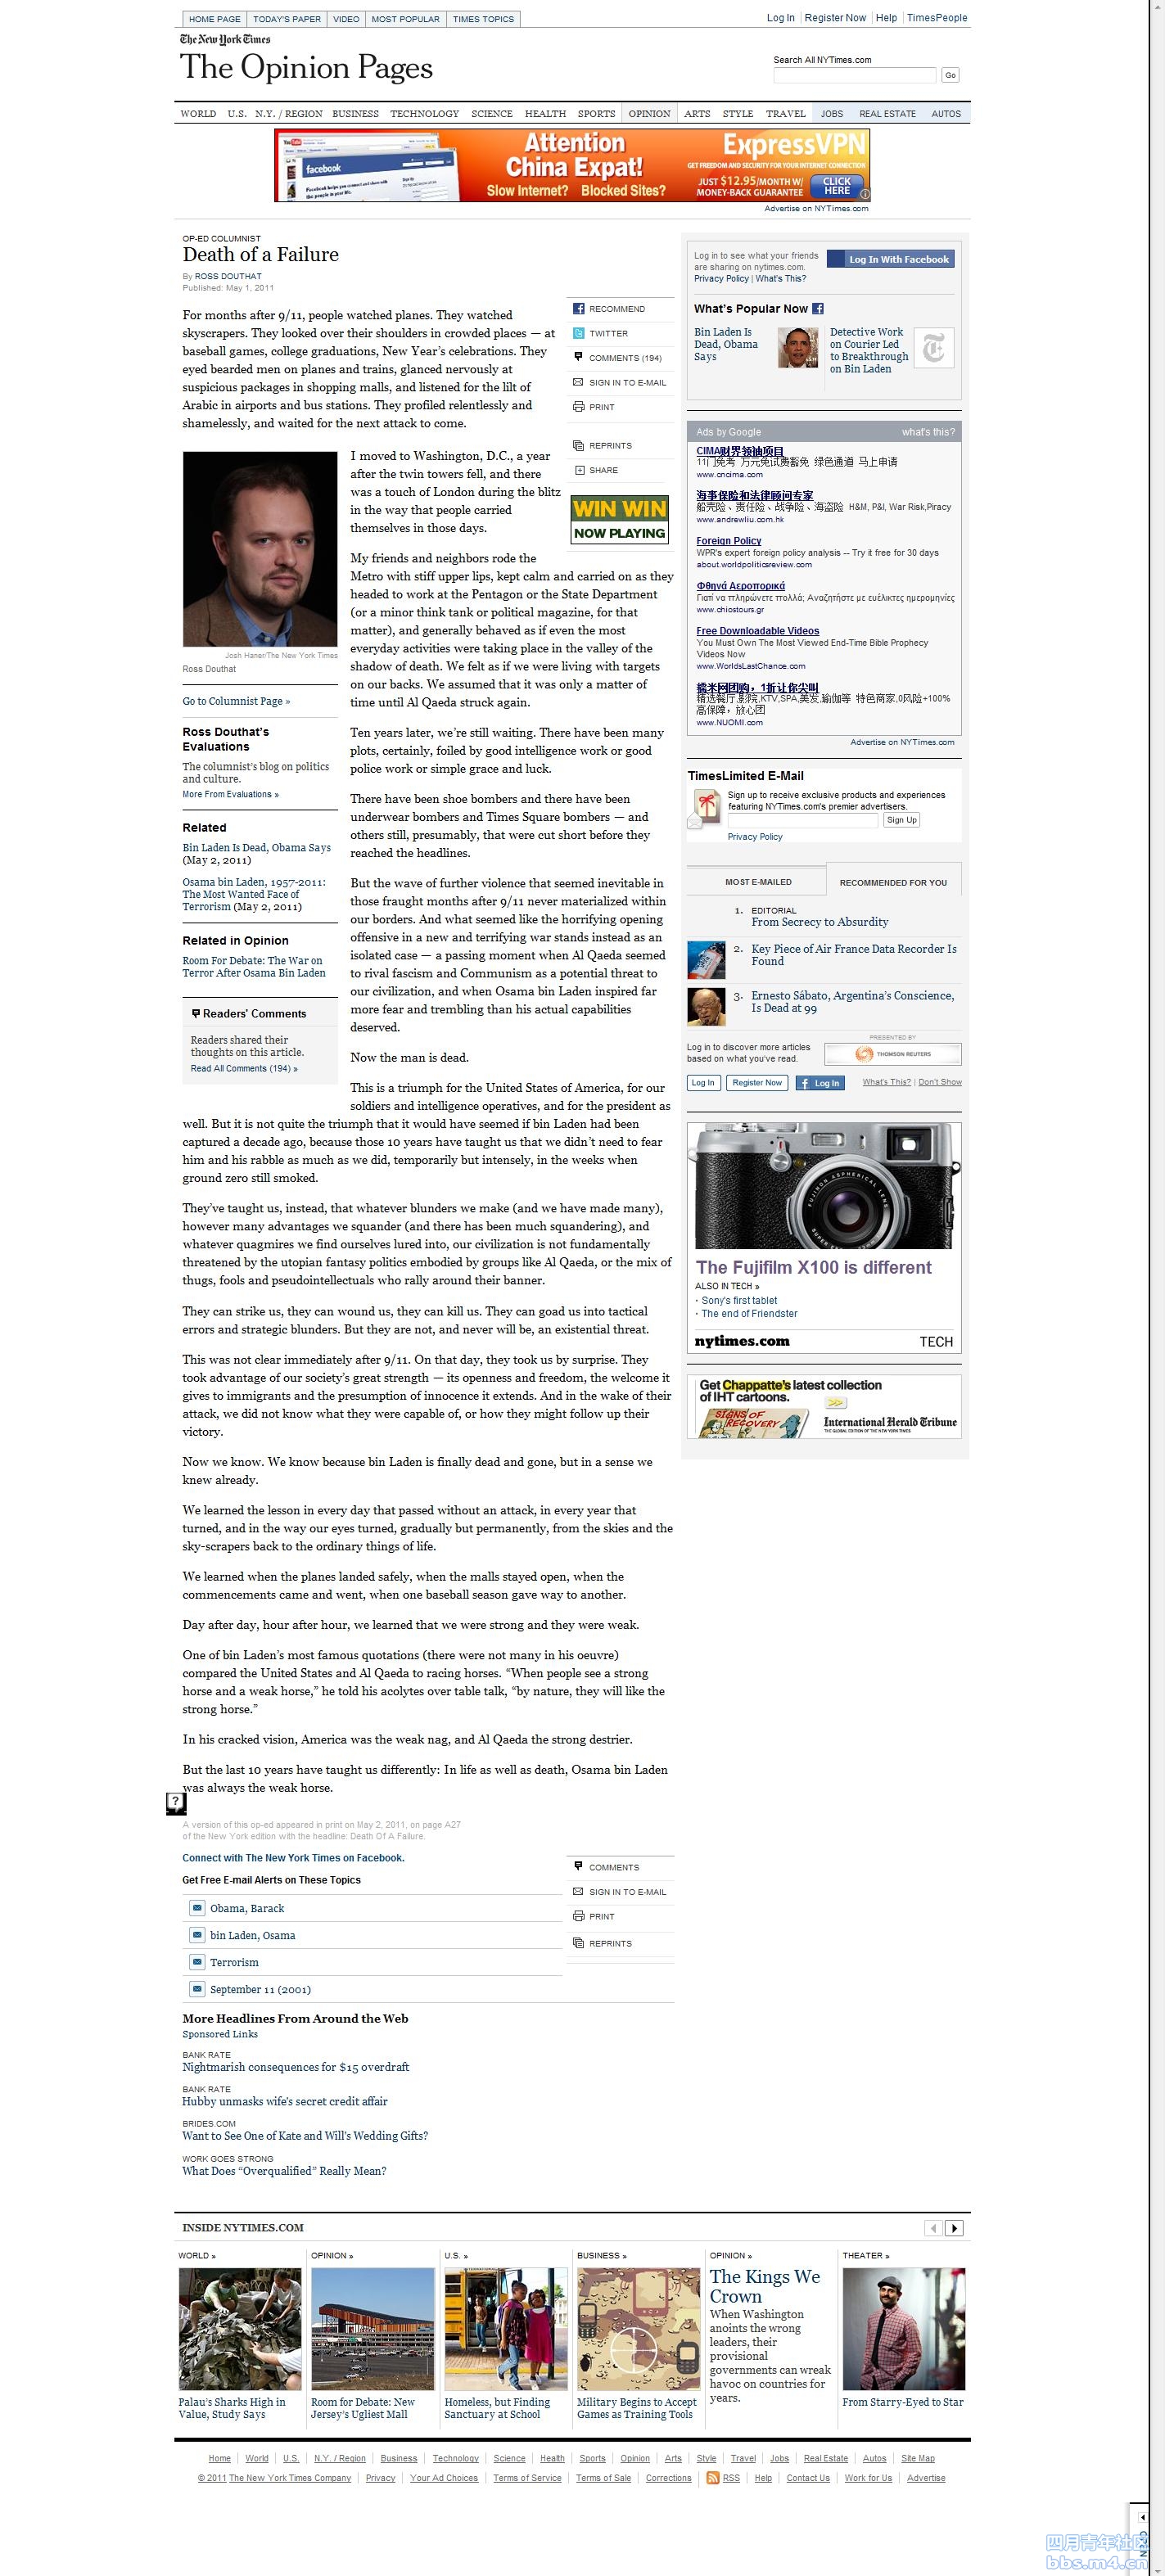 Death of Bin Laden - NYTimes_com.jpg